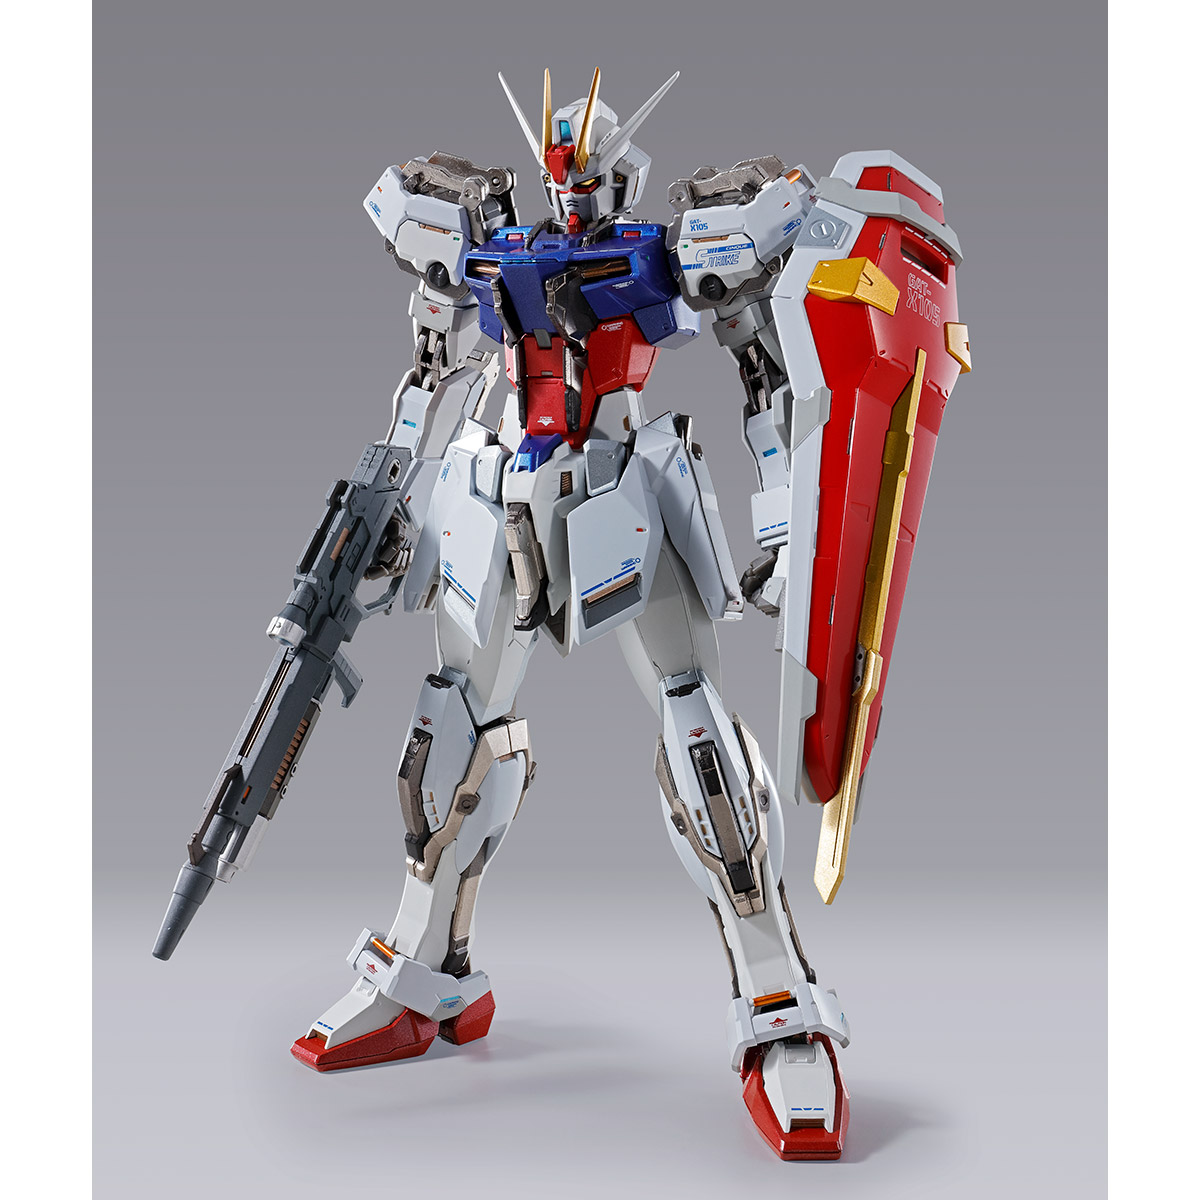 Metal Build Strike Gundam Gundam Premium Bandai Singapore Online Store For Action Figures Model Kits Toys And More